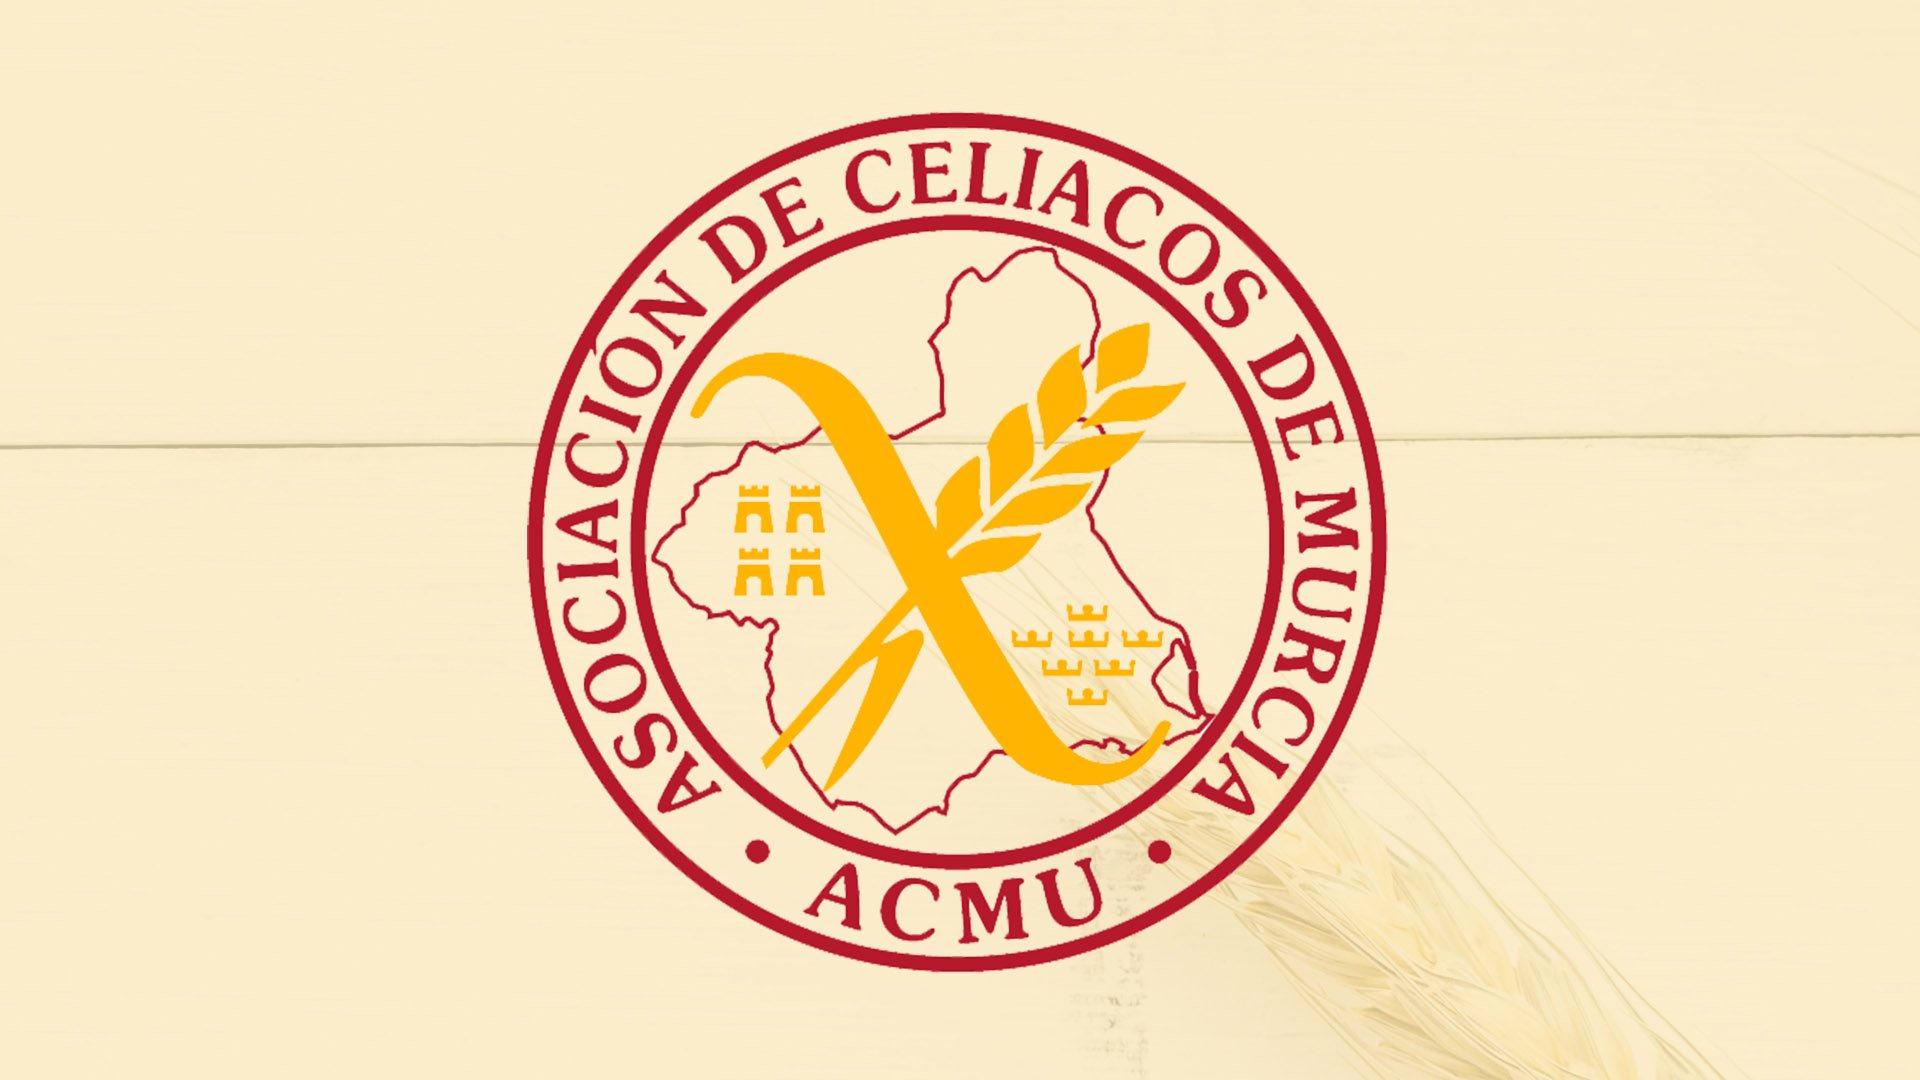 Asociación de Celiacos de Murcia (ACMU)